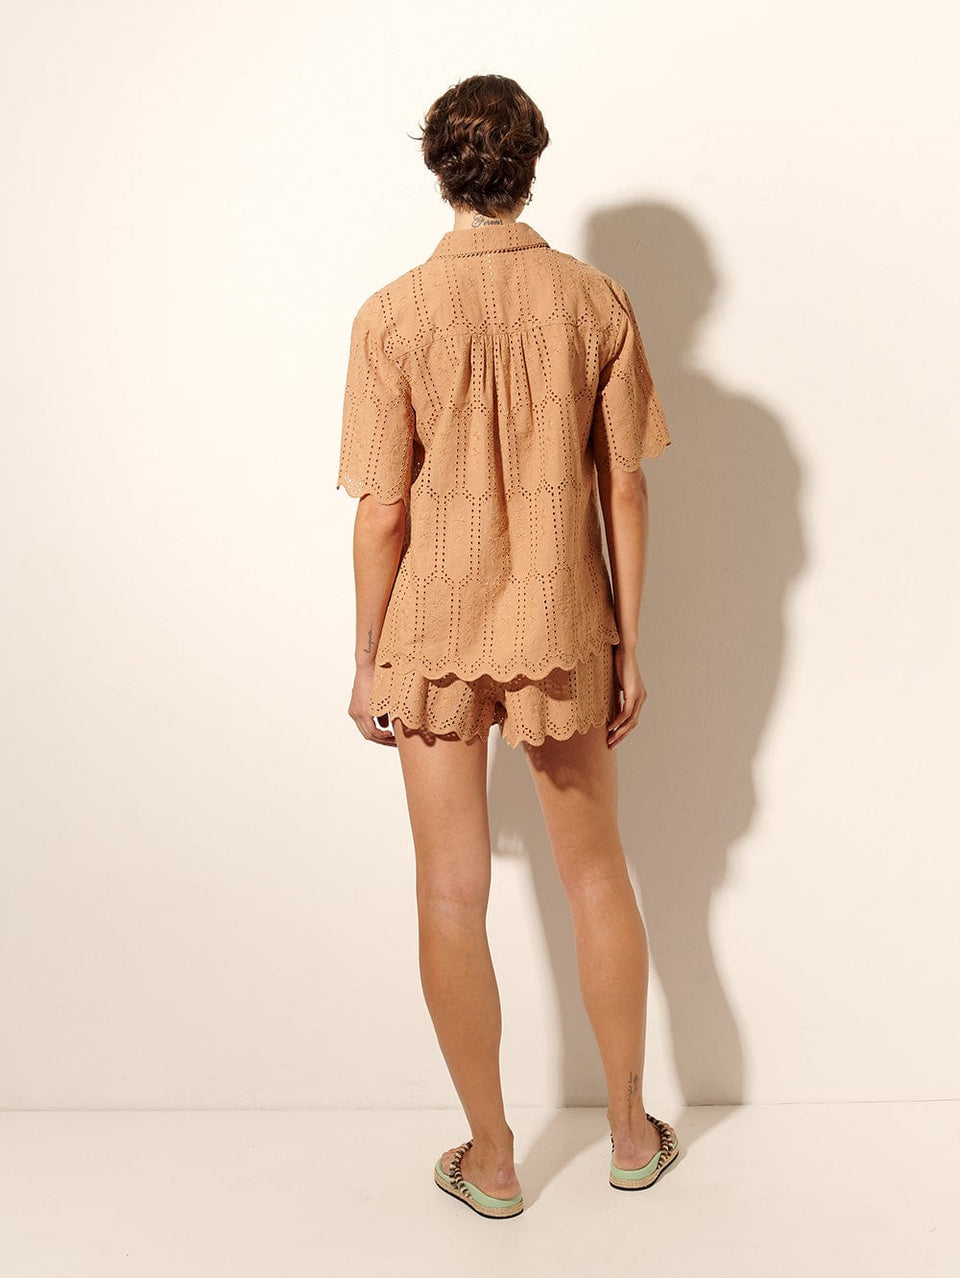 Estelle Short Mocha KIVARI | Model wears brown shorts with lace detail  back view